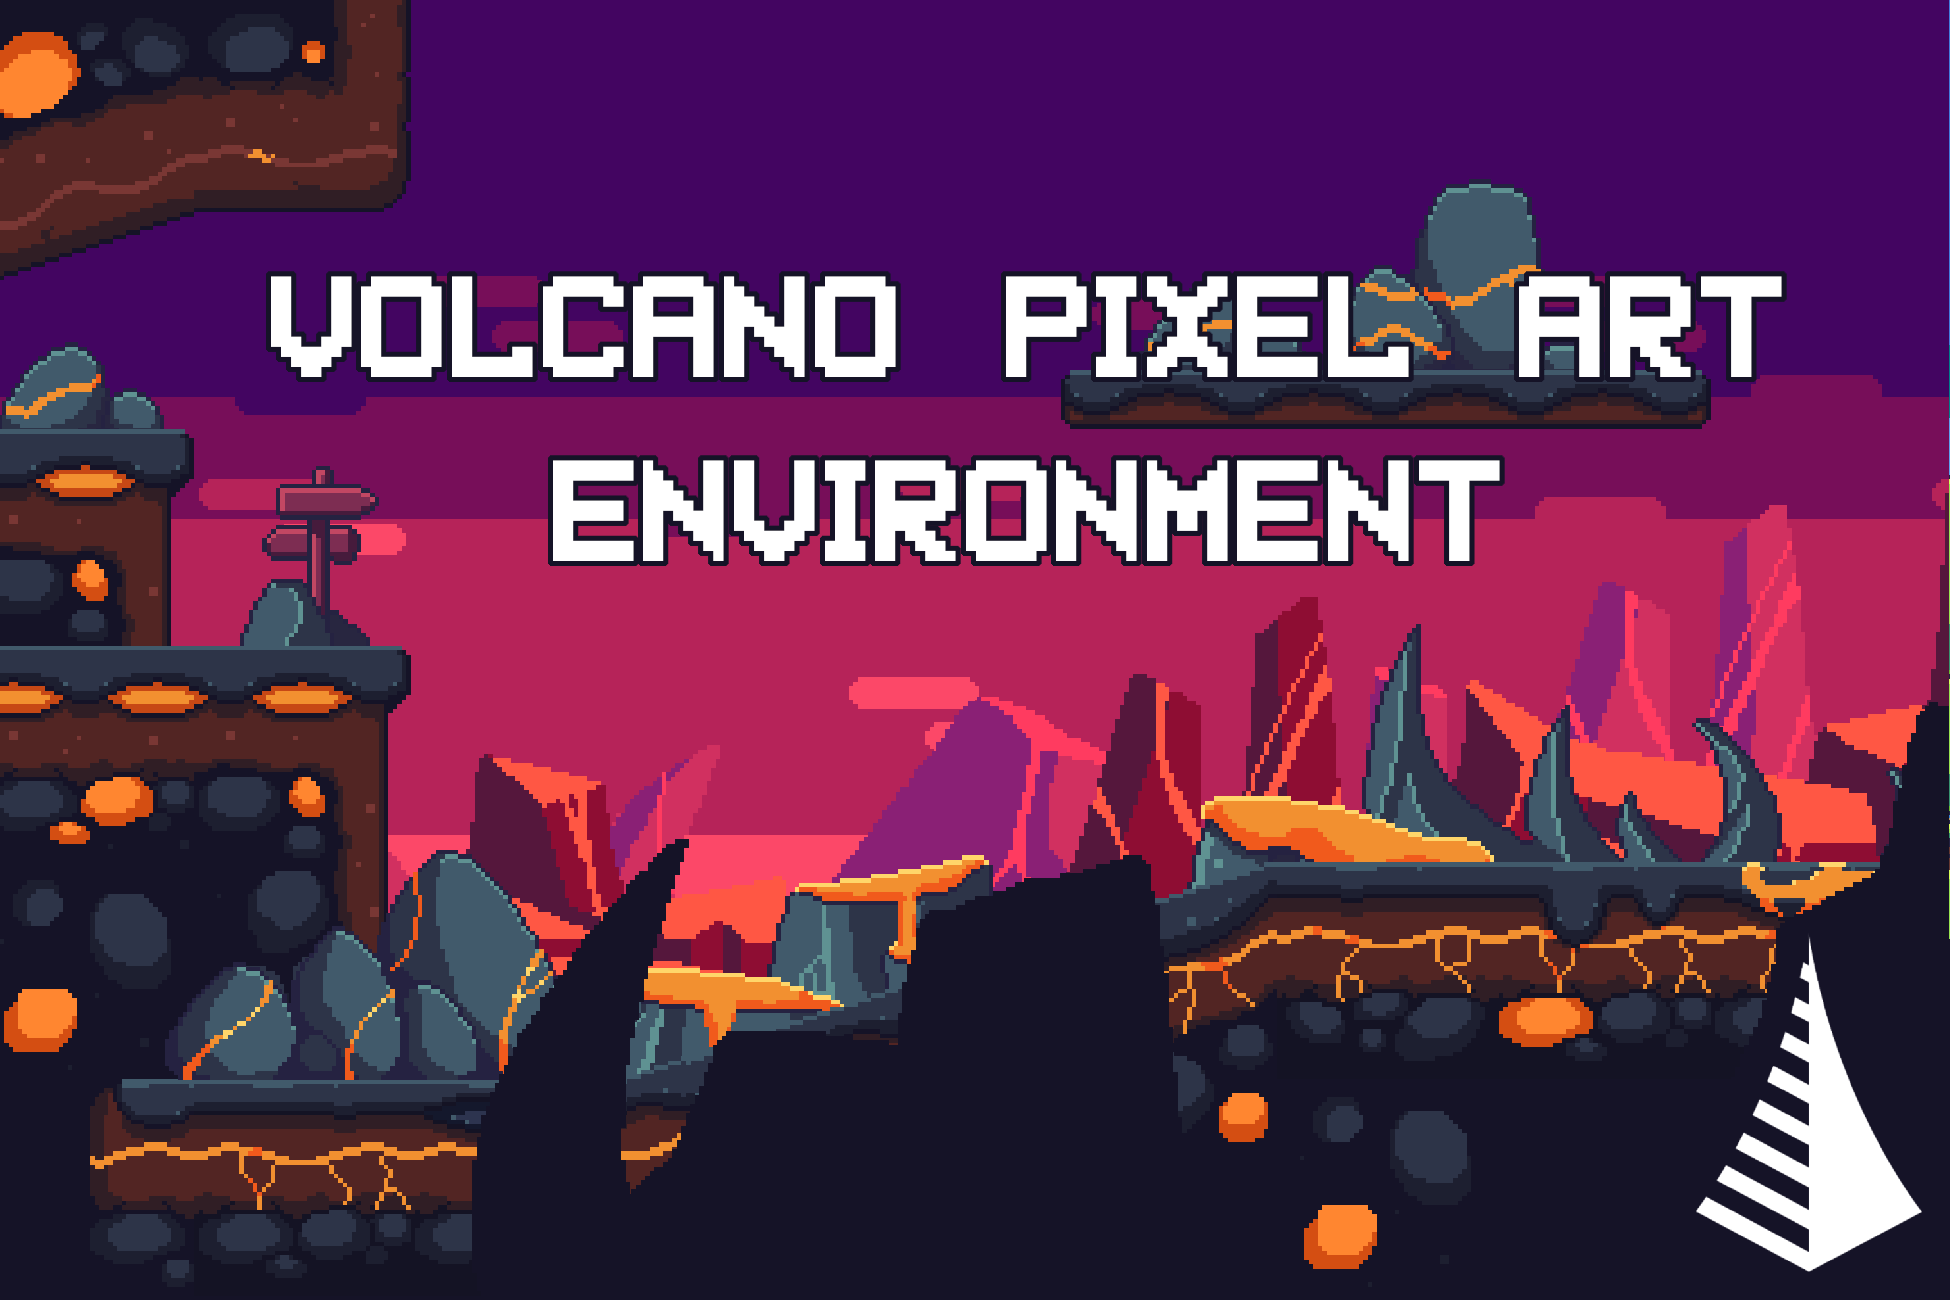 Volcano Pixel Art Environment by BlackSpire Studio